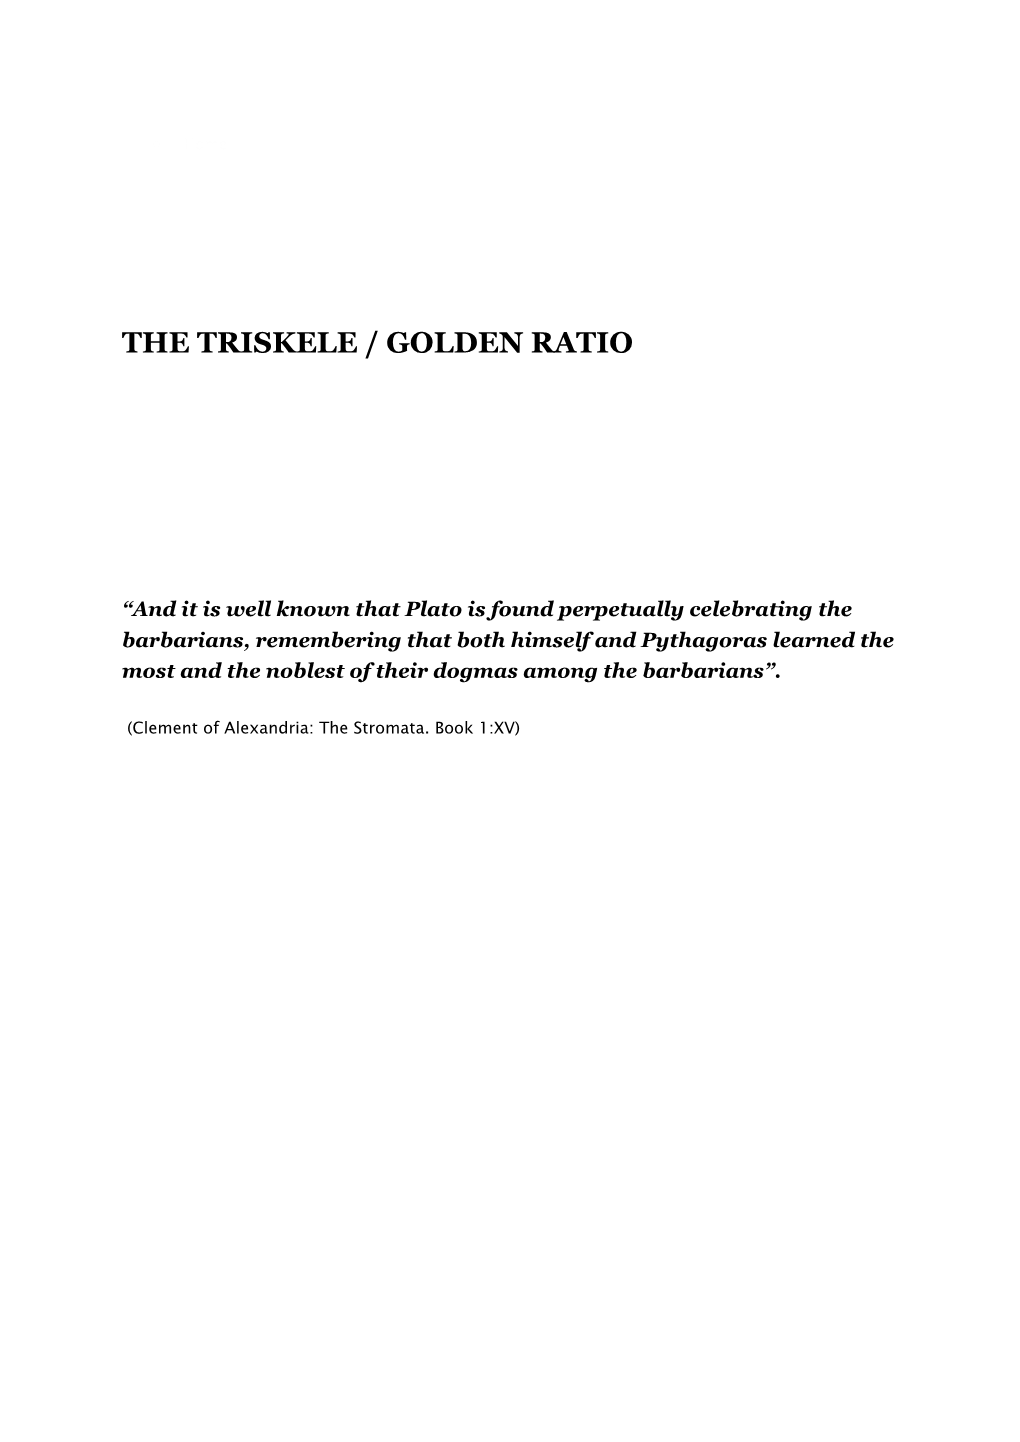 The Triskele / Golden Ratio